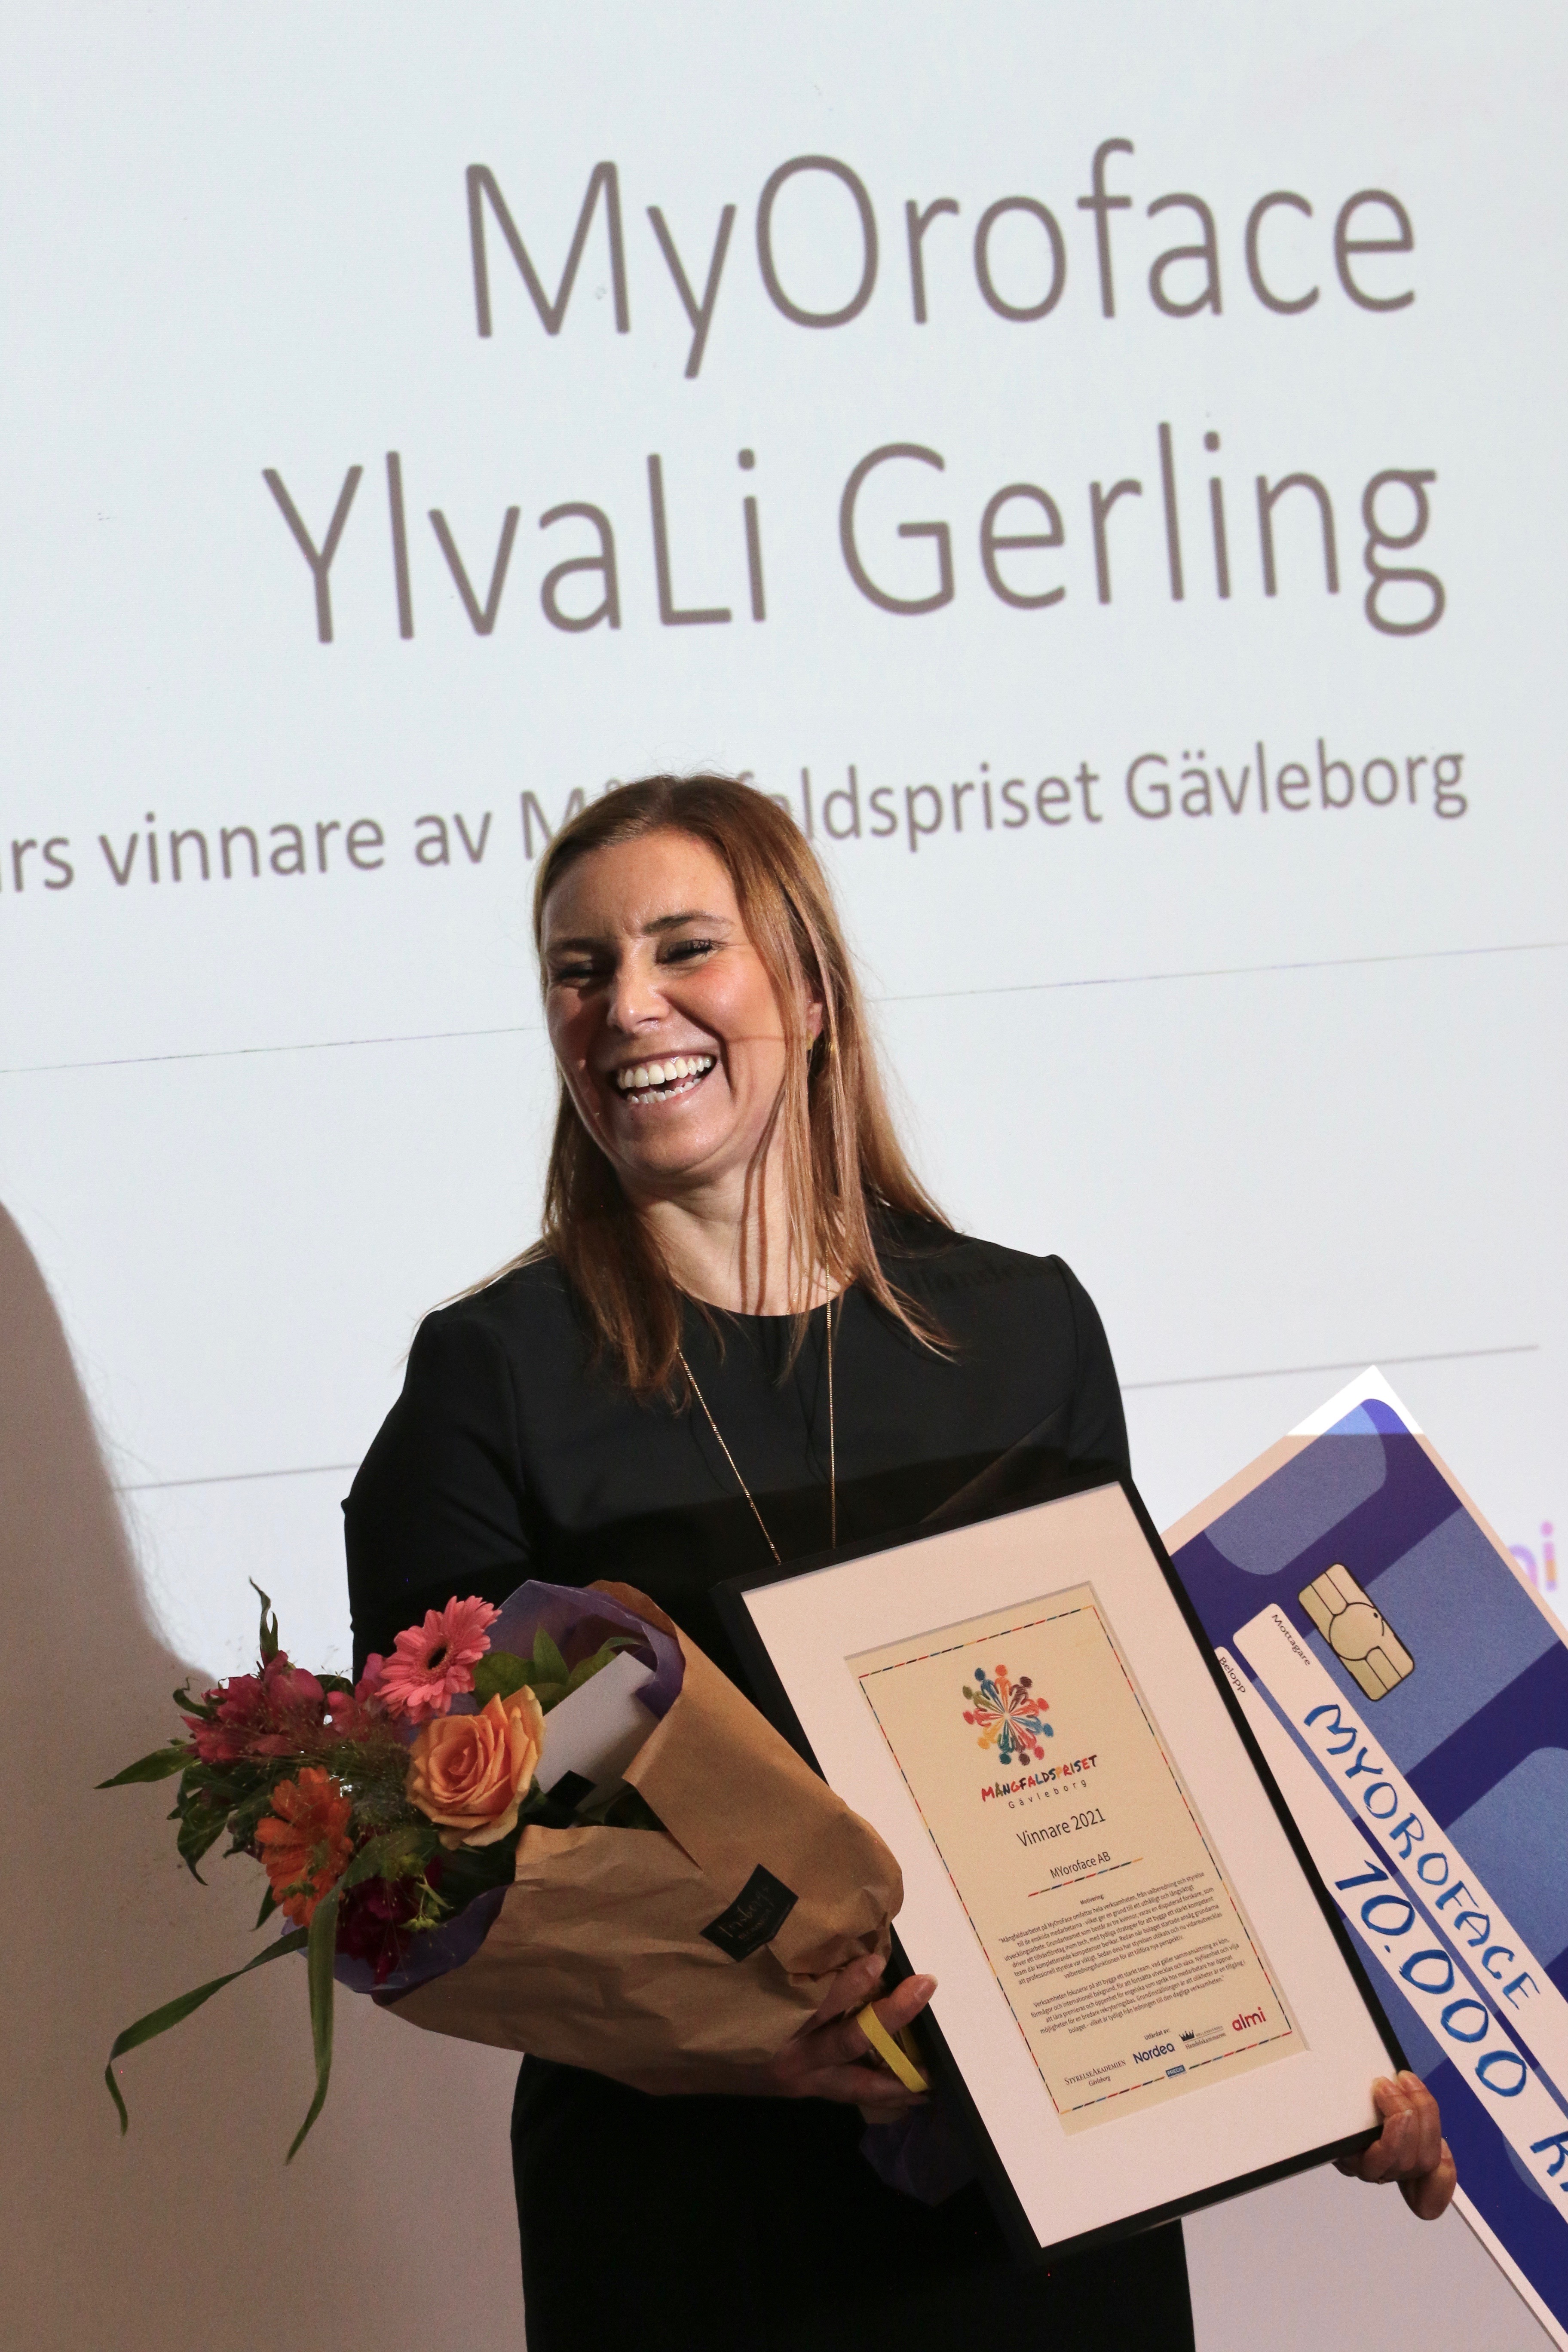 YlvaLi Gerling MyOroface vinnare mångfaldspriset